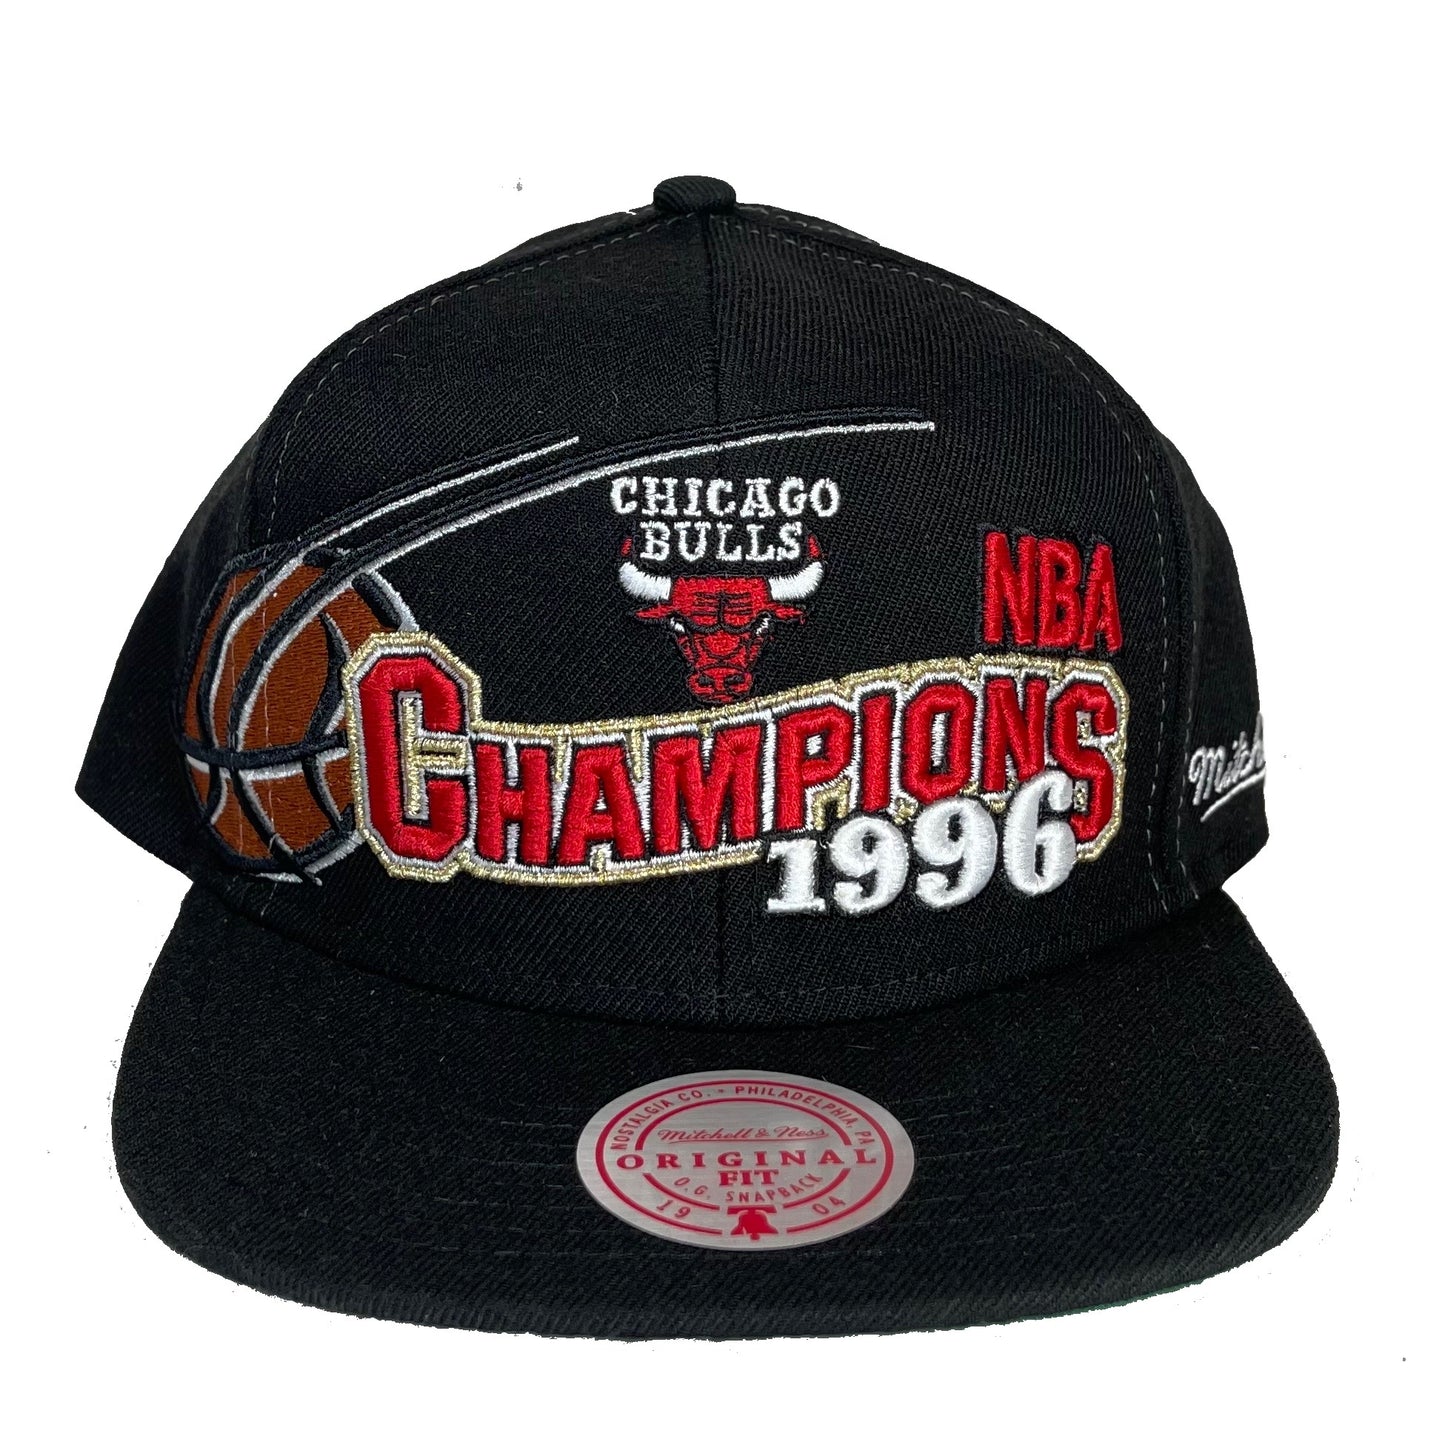 Chicago Bulls Champion 1996 (Black) Snapback